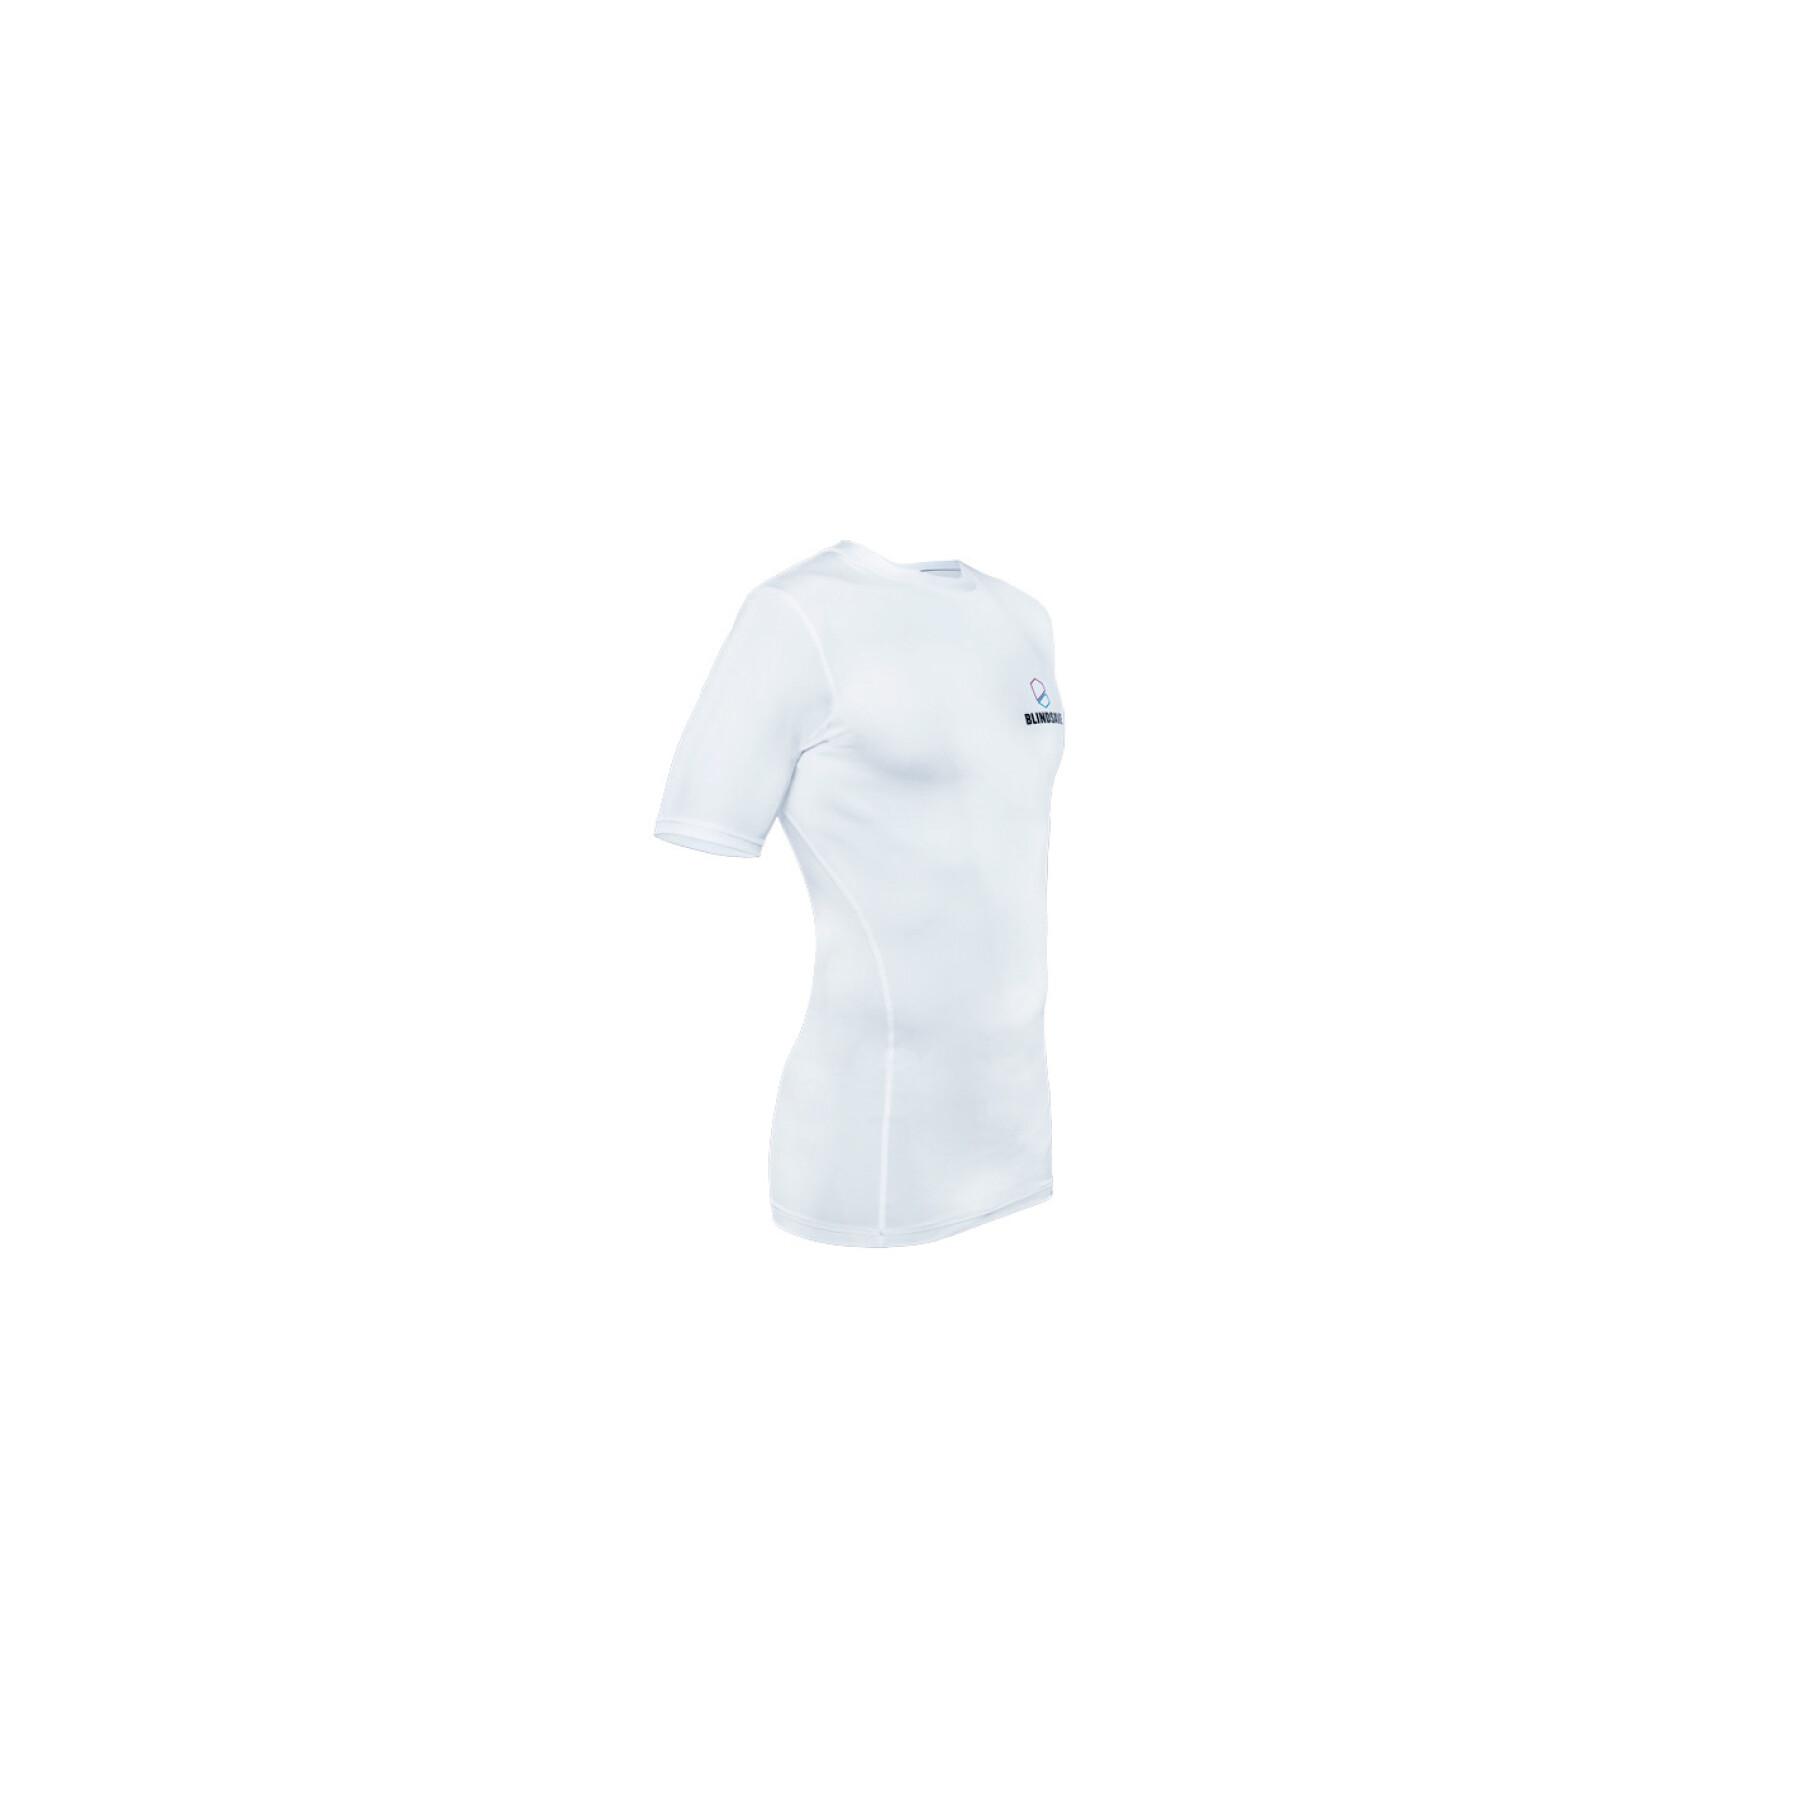 Kompressions-T-shirt Blindsave